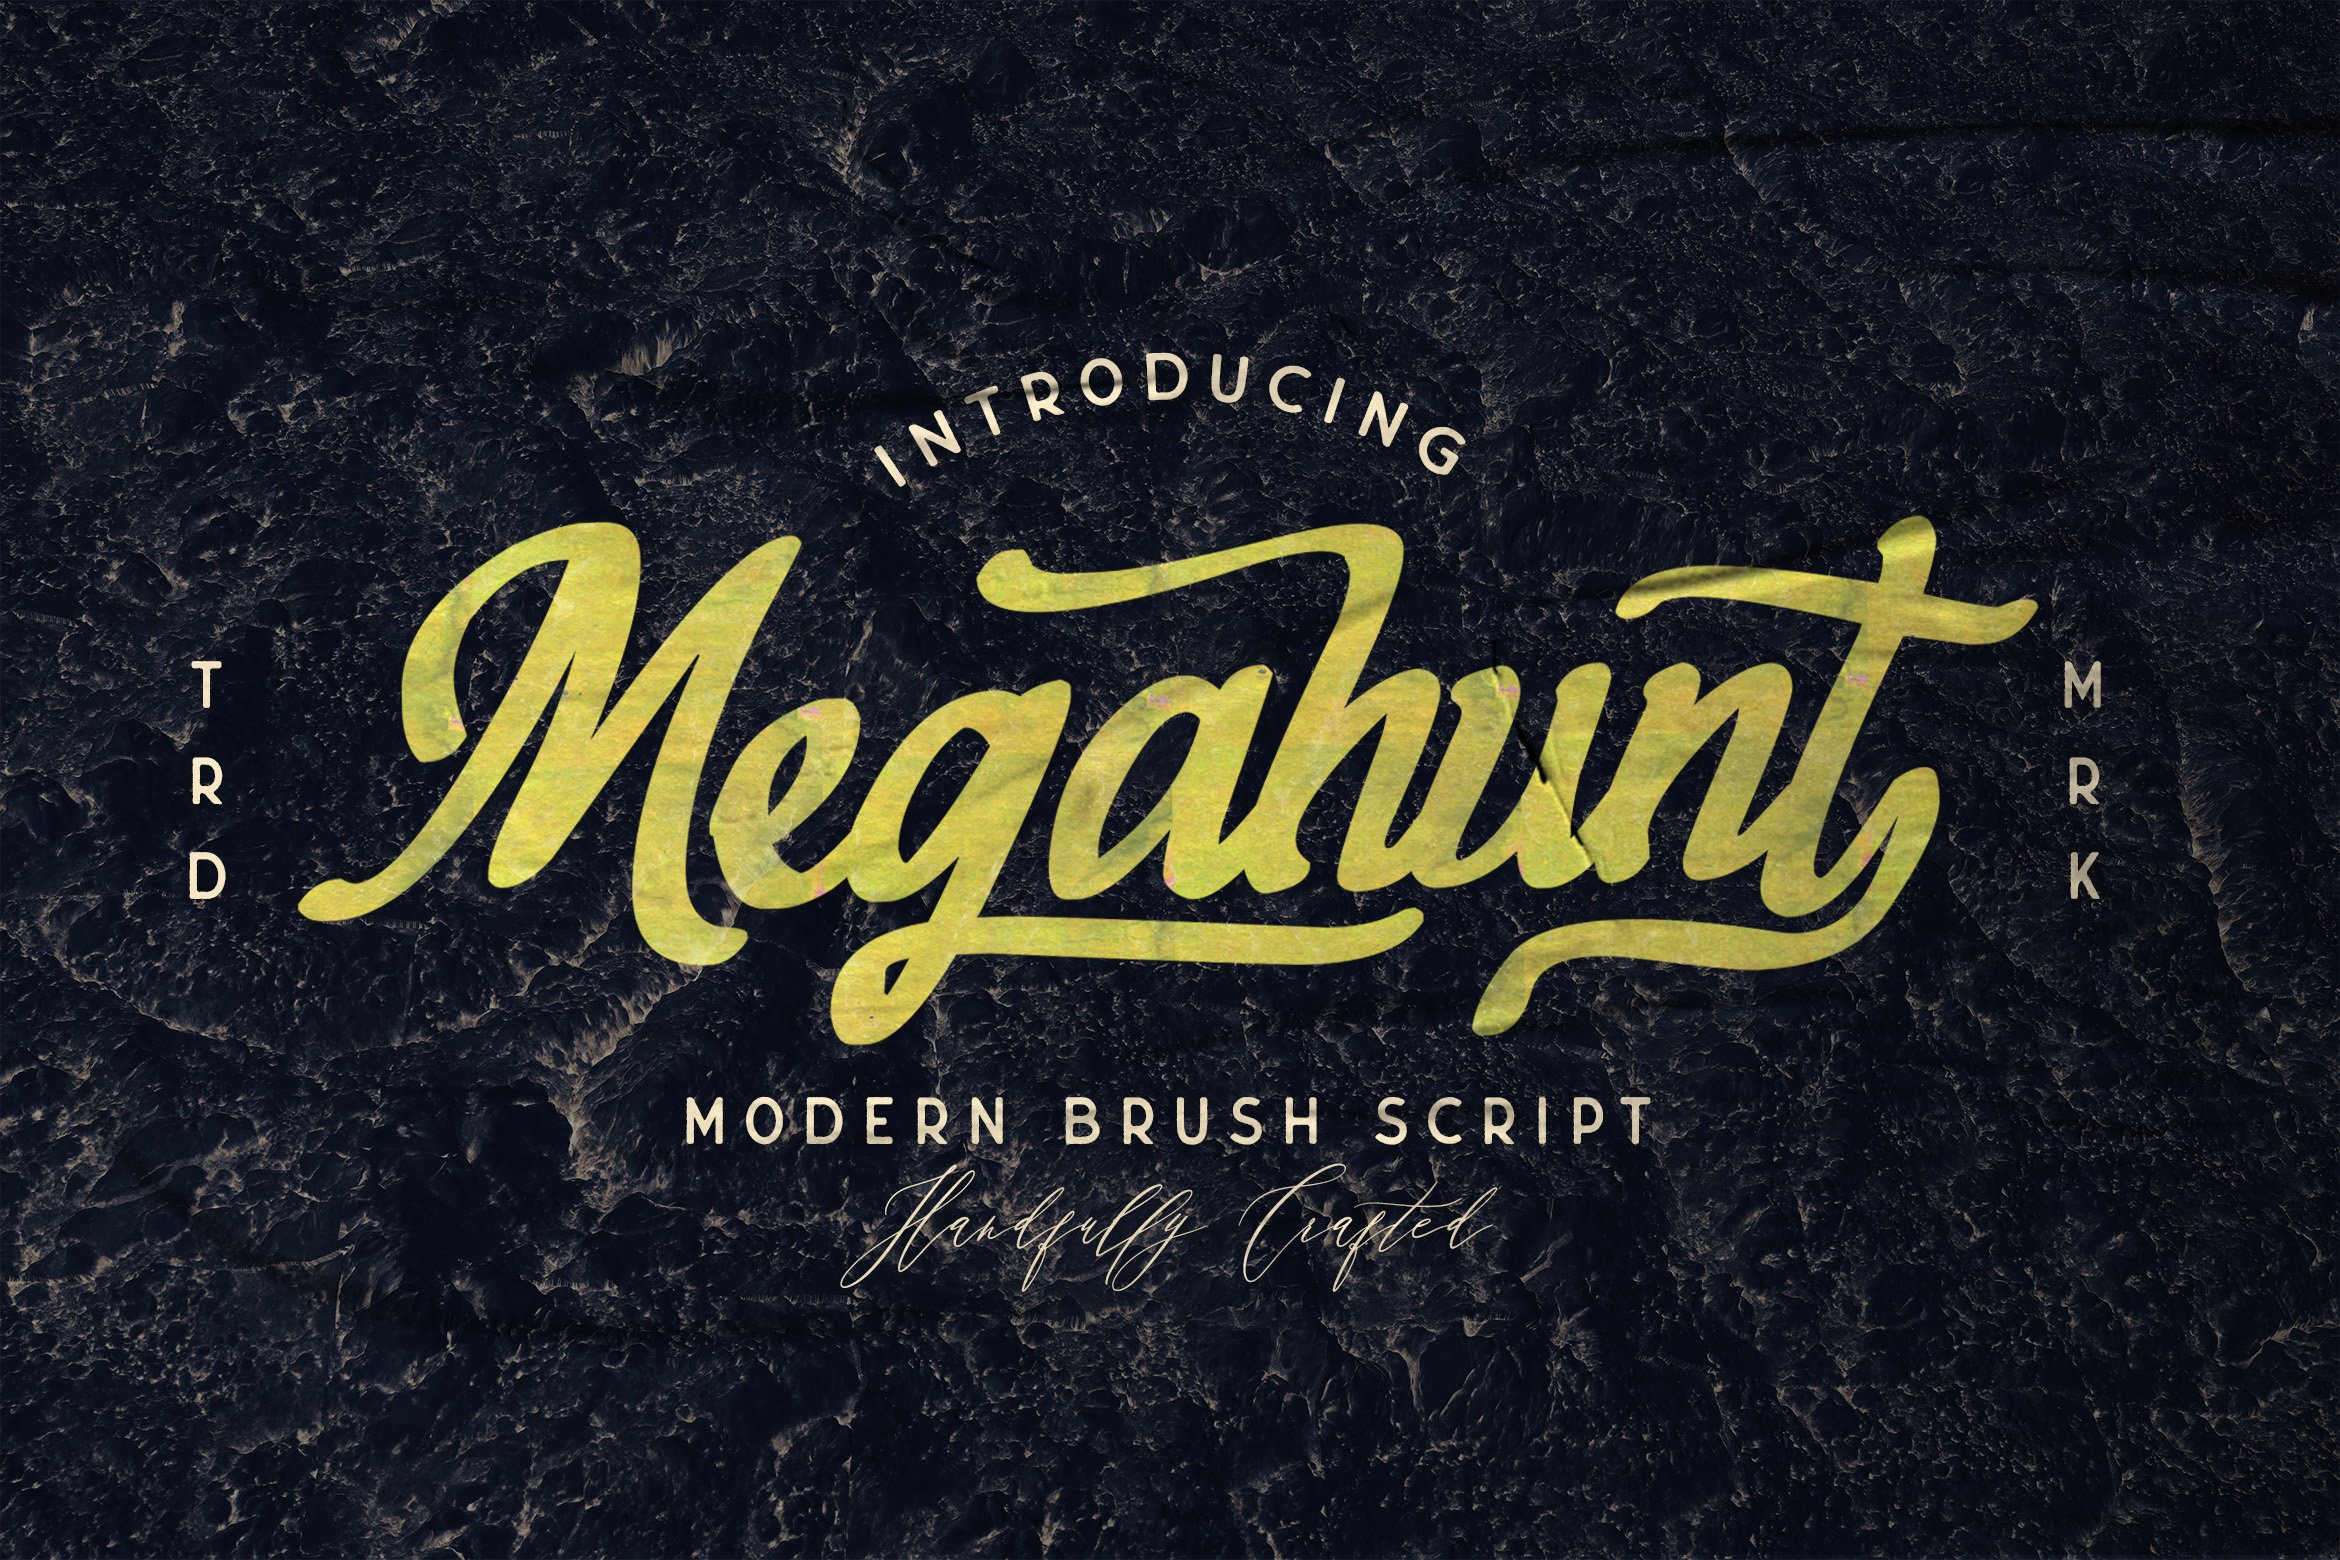 Megahunt - Brush Script Font cover image.